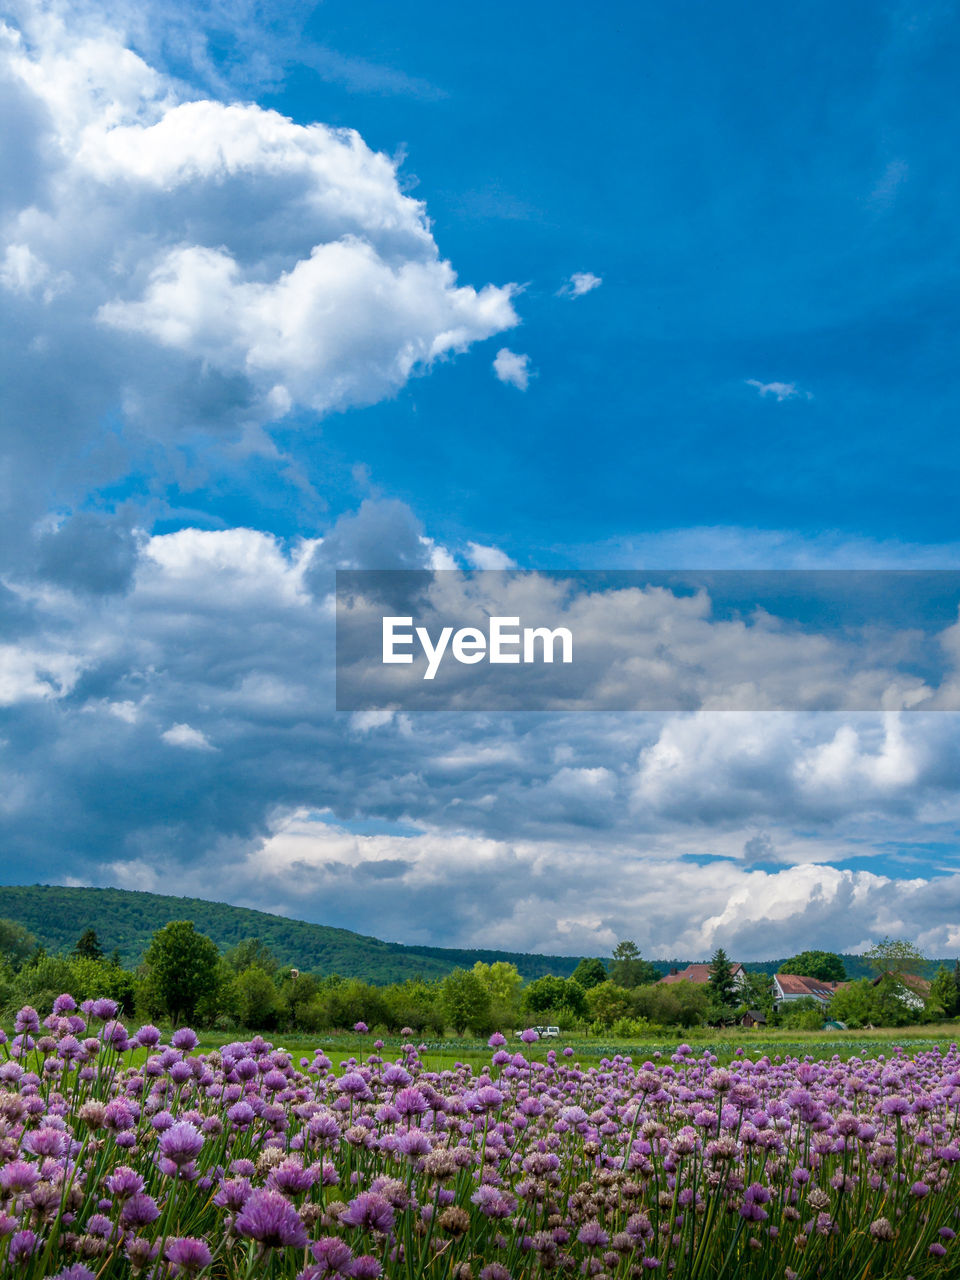 SCENIC VIEW OF FLOWERING FIELD AGAINST SKY